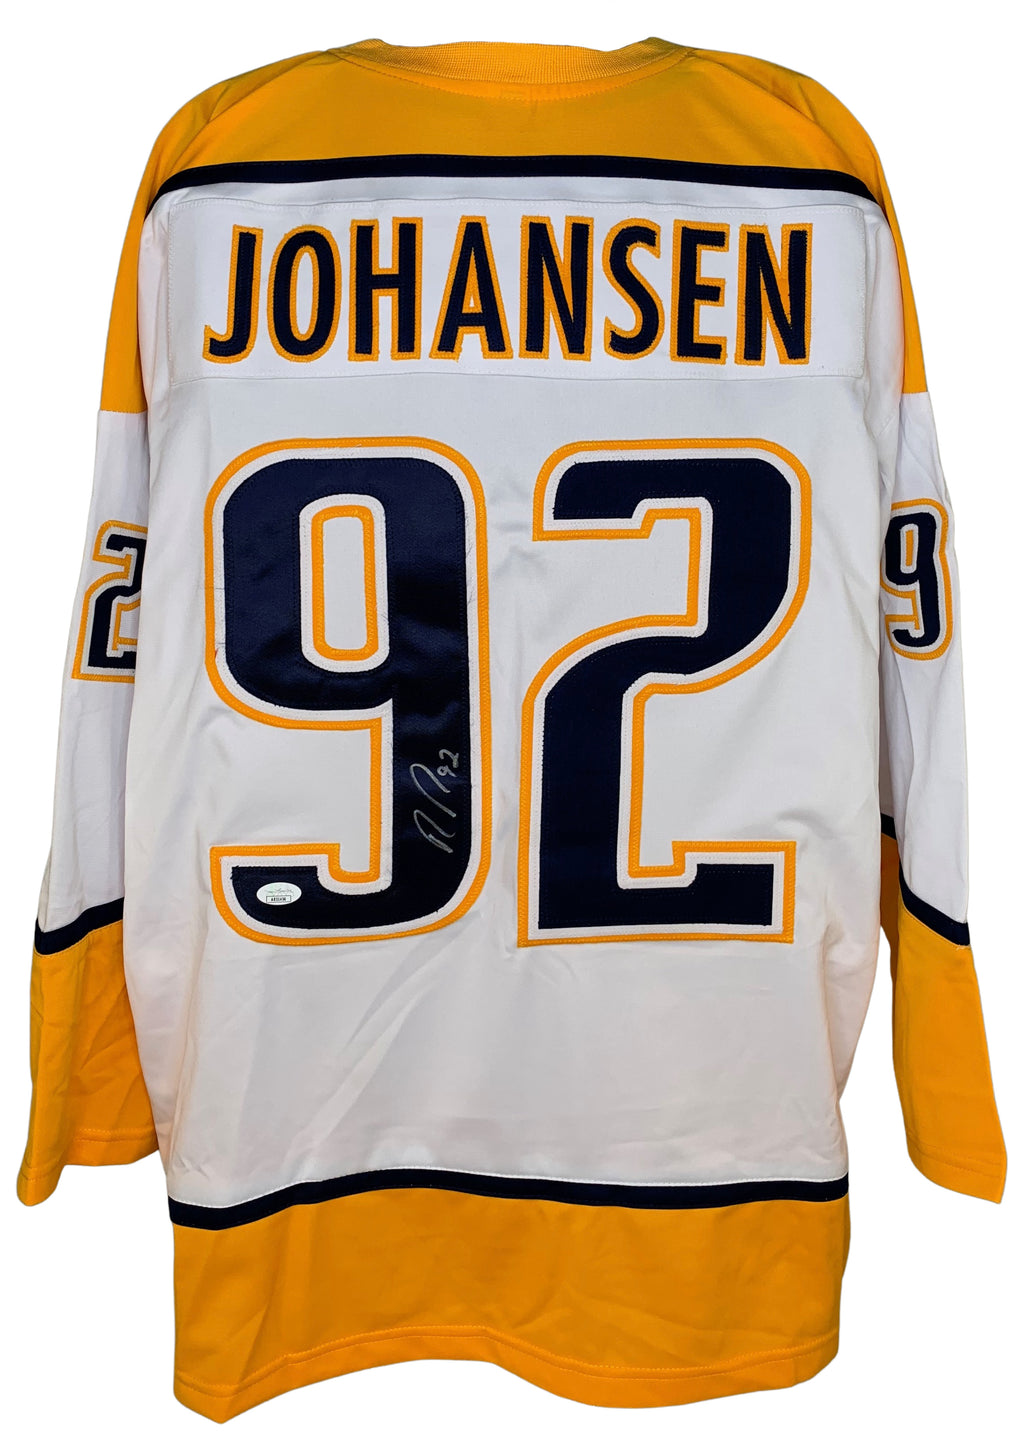 Ryan Johansen autographed signed jersey NHL Nashville Predators JSA COA